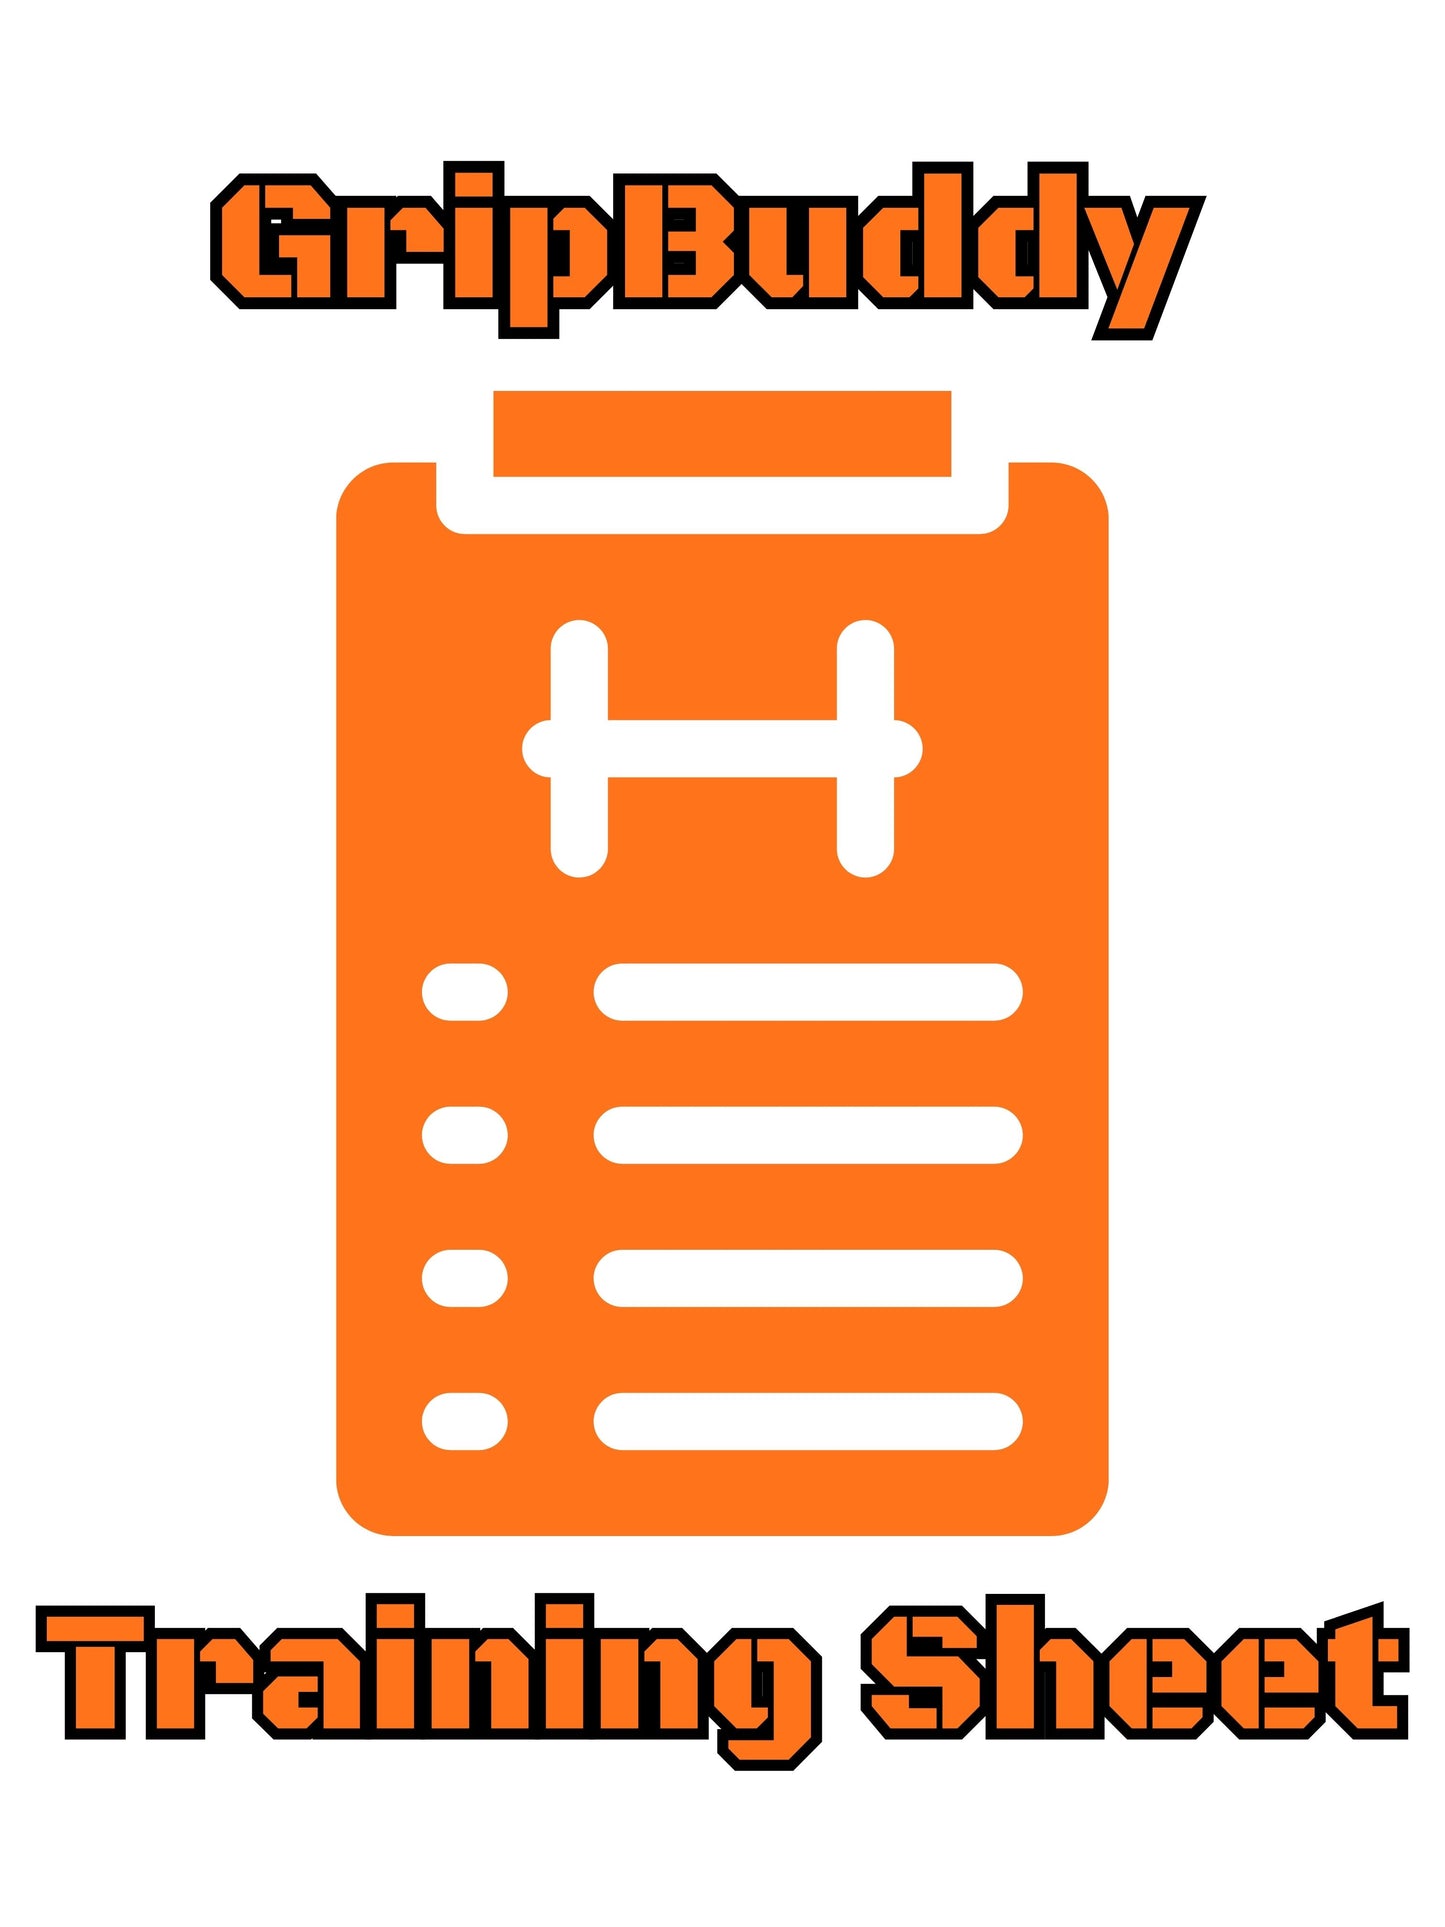 Grip Buddy Training Sheet